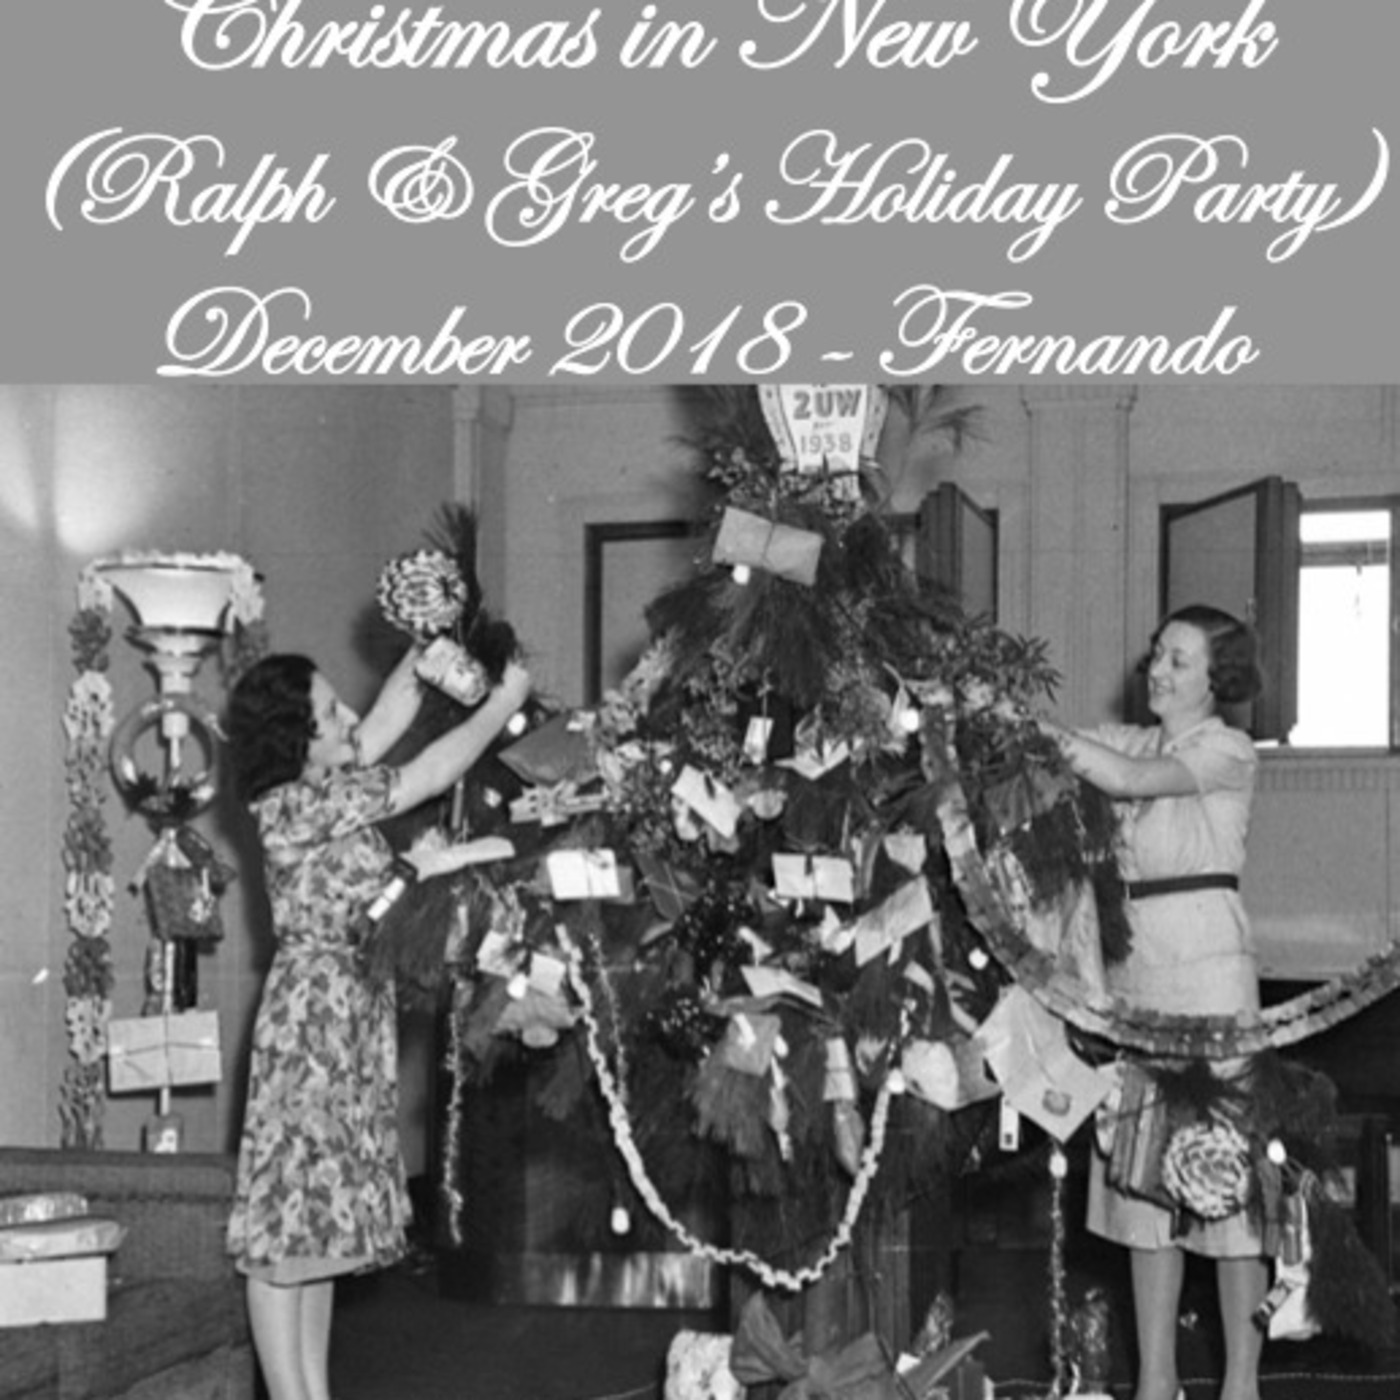 Fernando - Christmas In New York (Ralph & Greg's Party) - December 2018